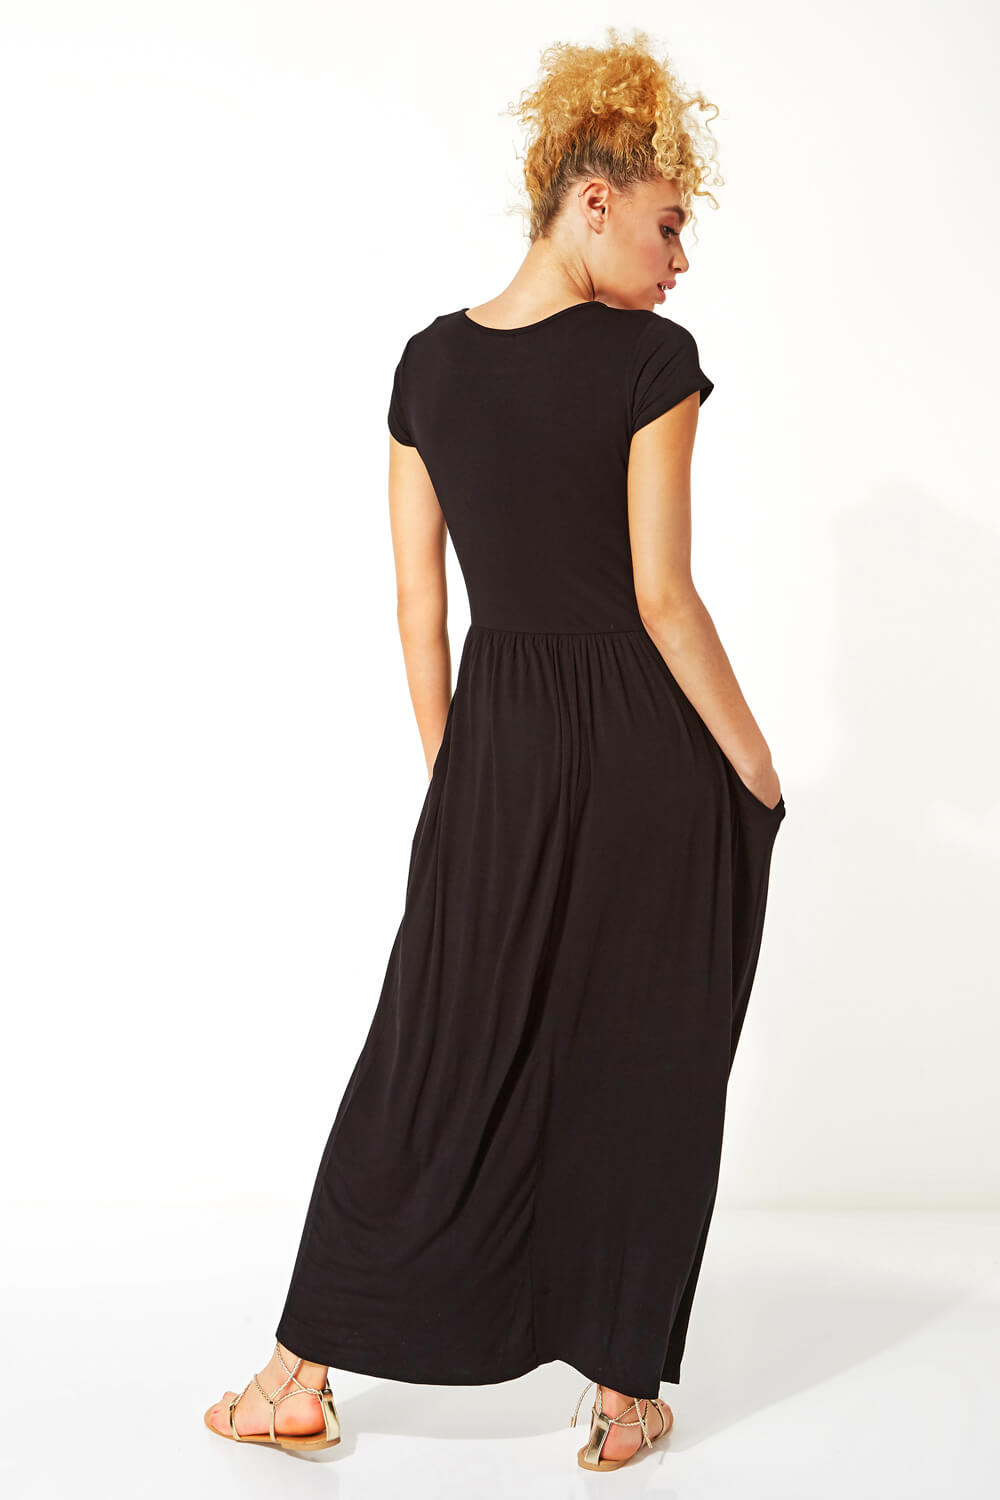 Black Gathered Skirt Maxi Dress, Image 2 of 4